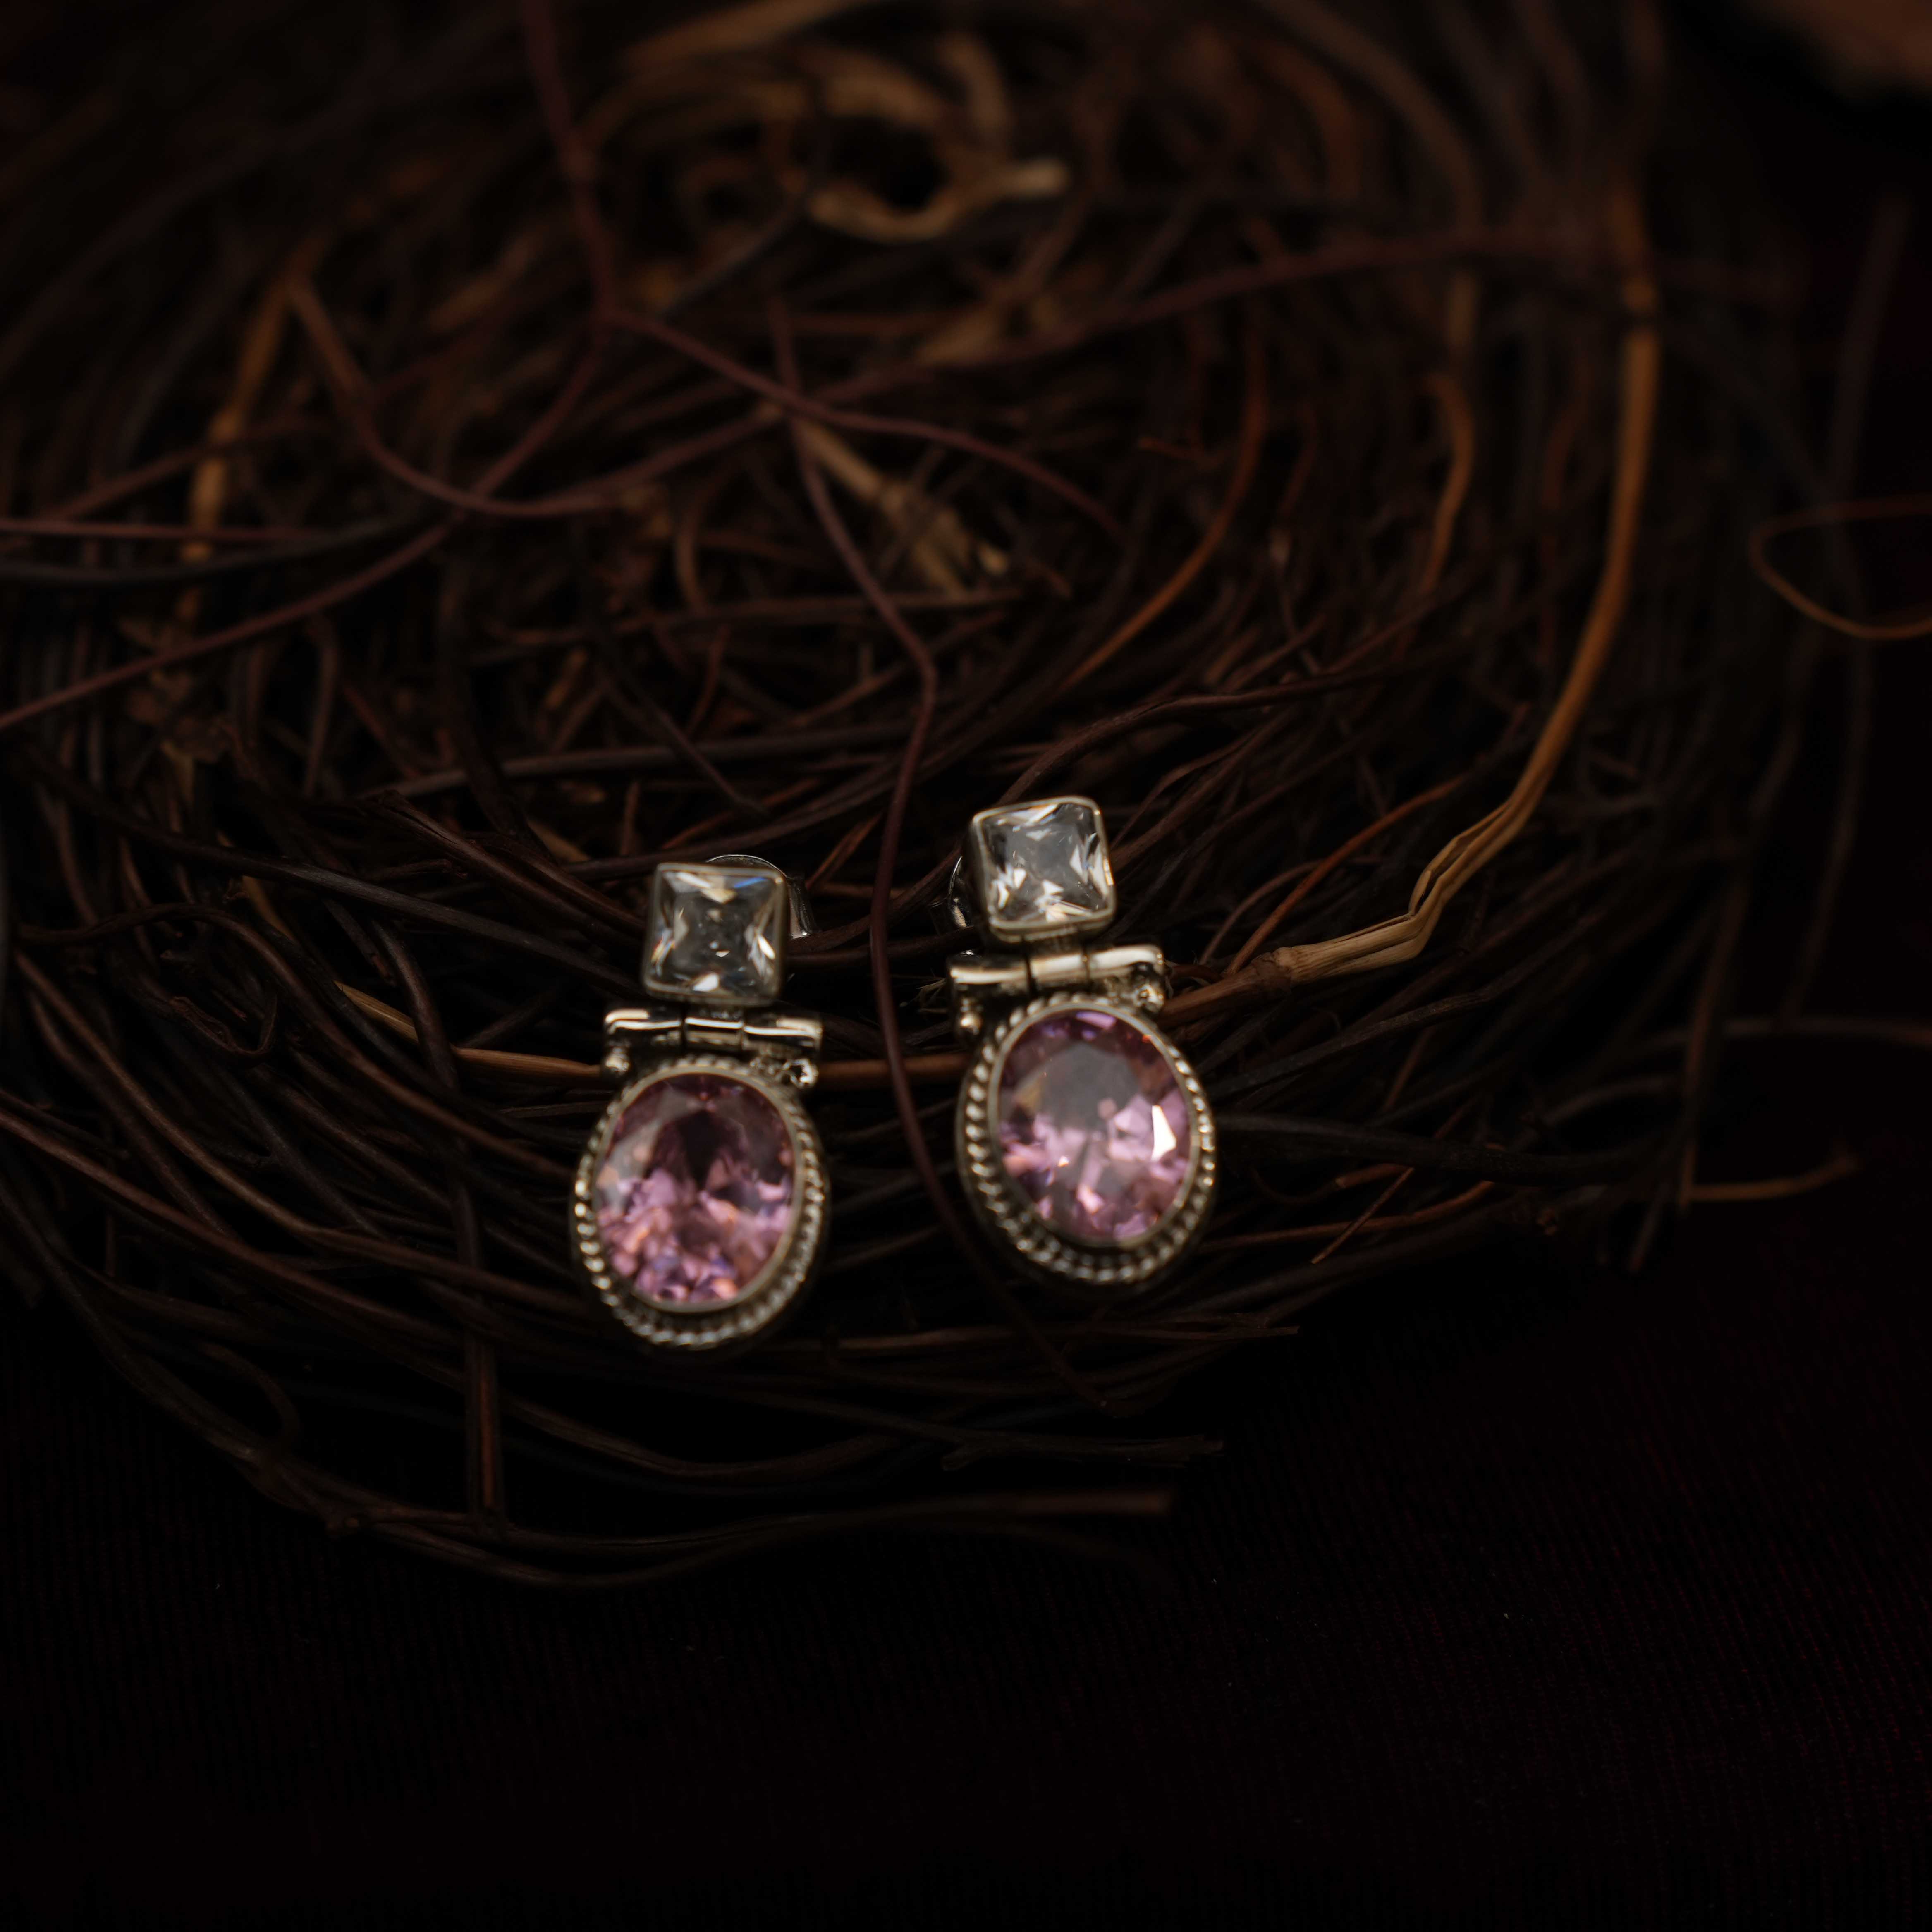 Radhi 925 Oxidized Silver Earrings - Pink